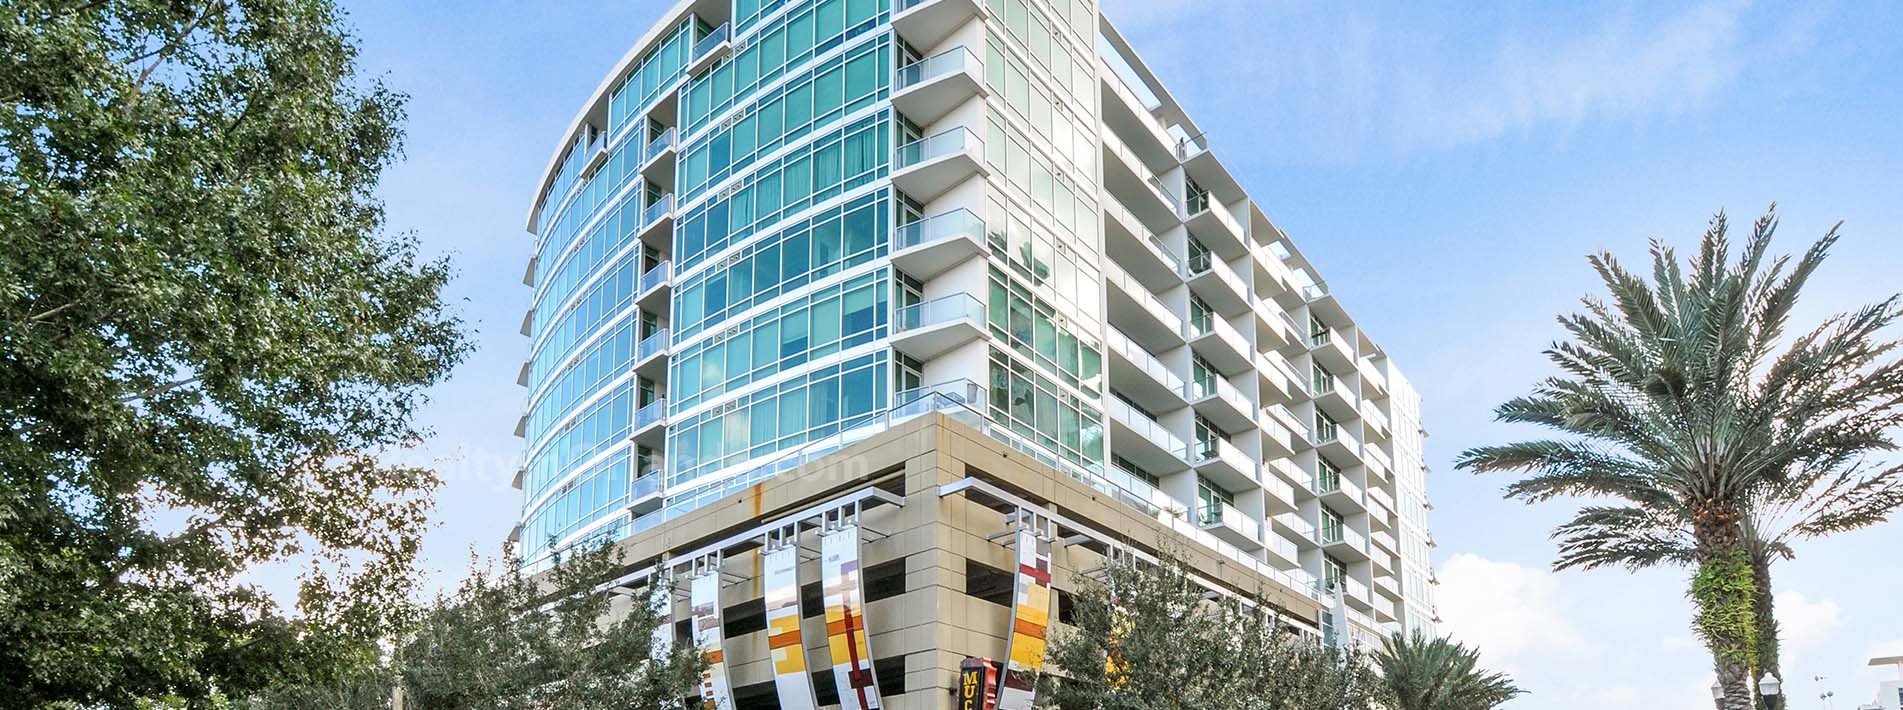 101 Eola Downtown Orlando Condominium Real Estate